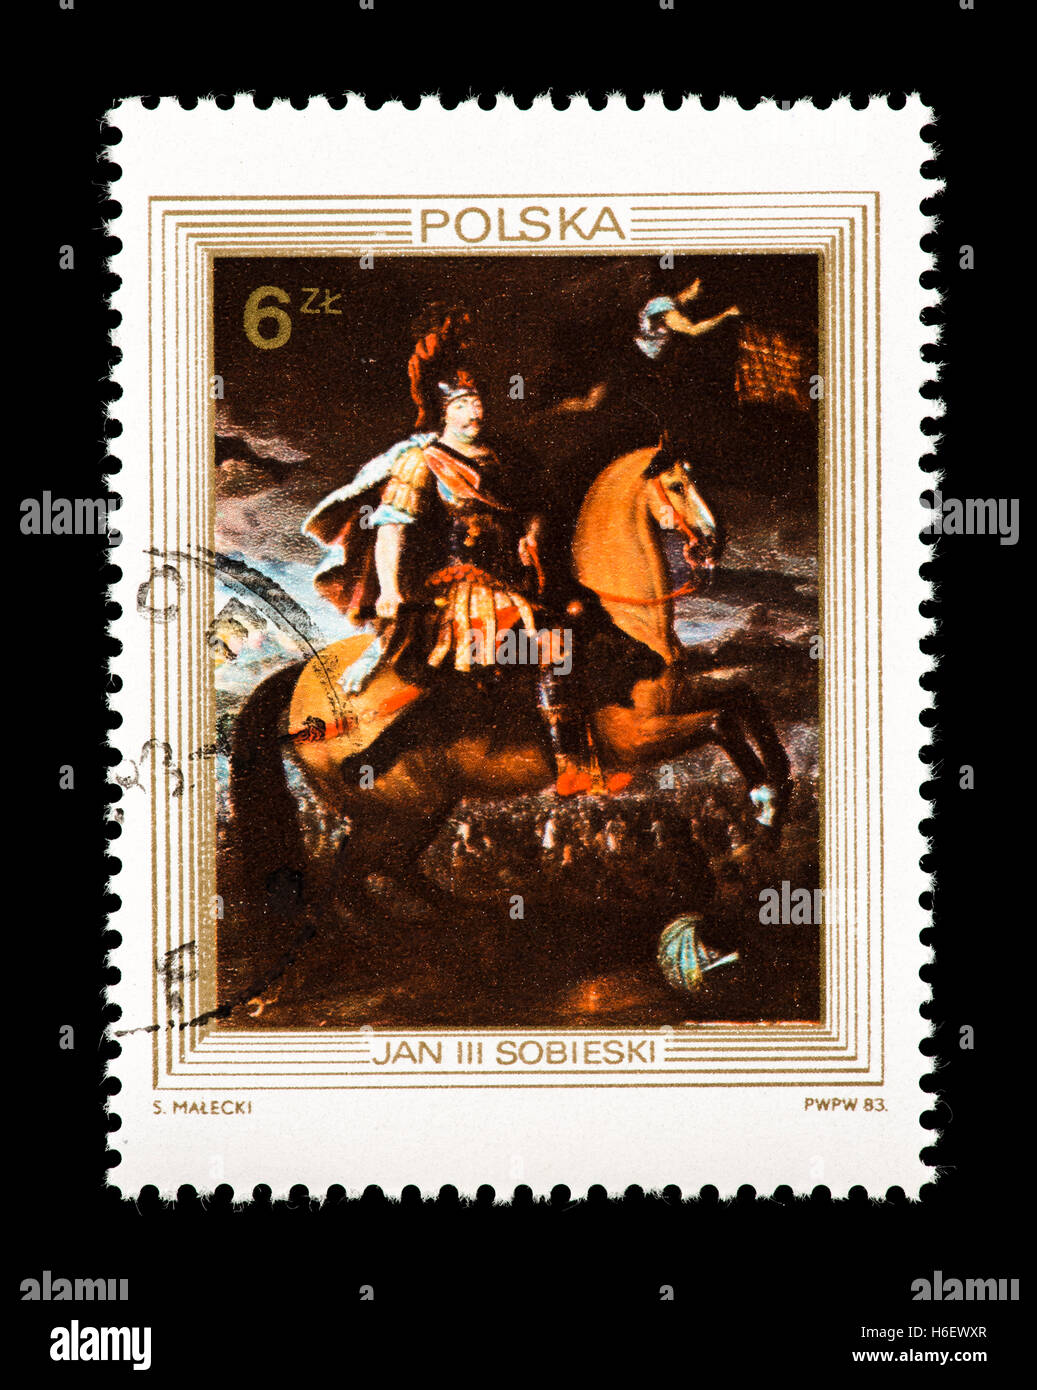 Postage stamp from Poland depicting King John Ill Sobieski on horseback. by Francesco Trevisani. Stock Photo